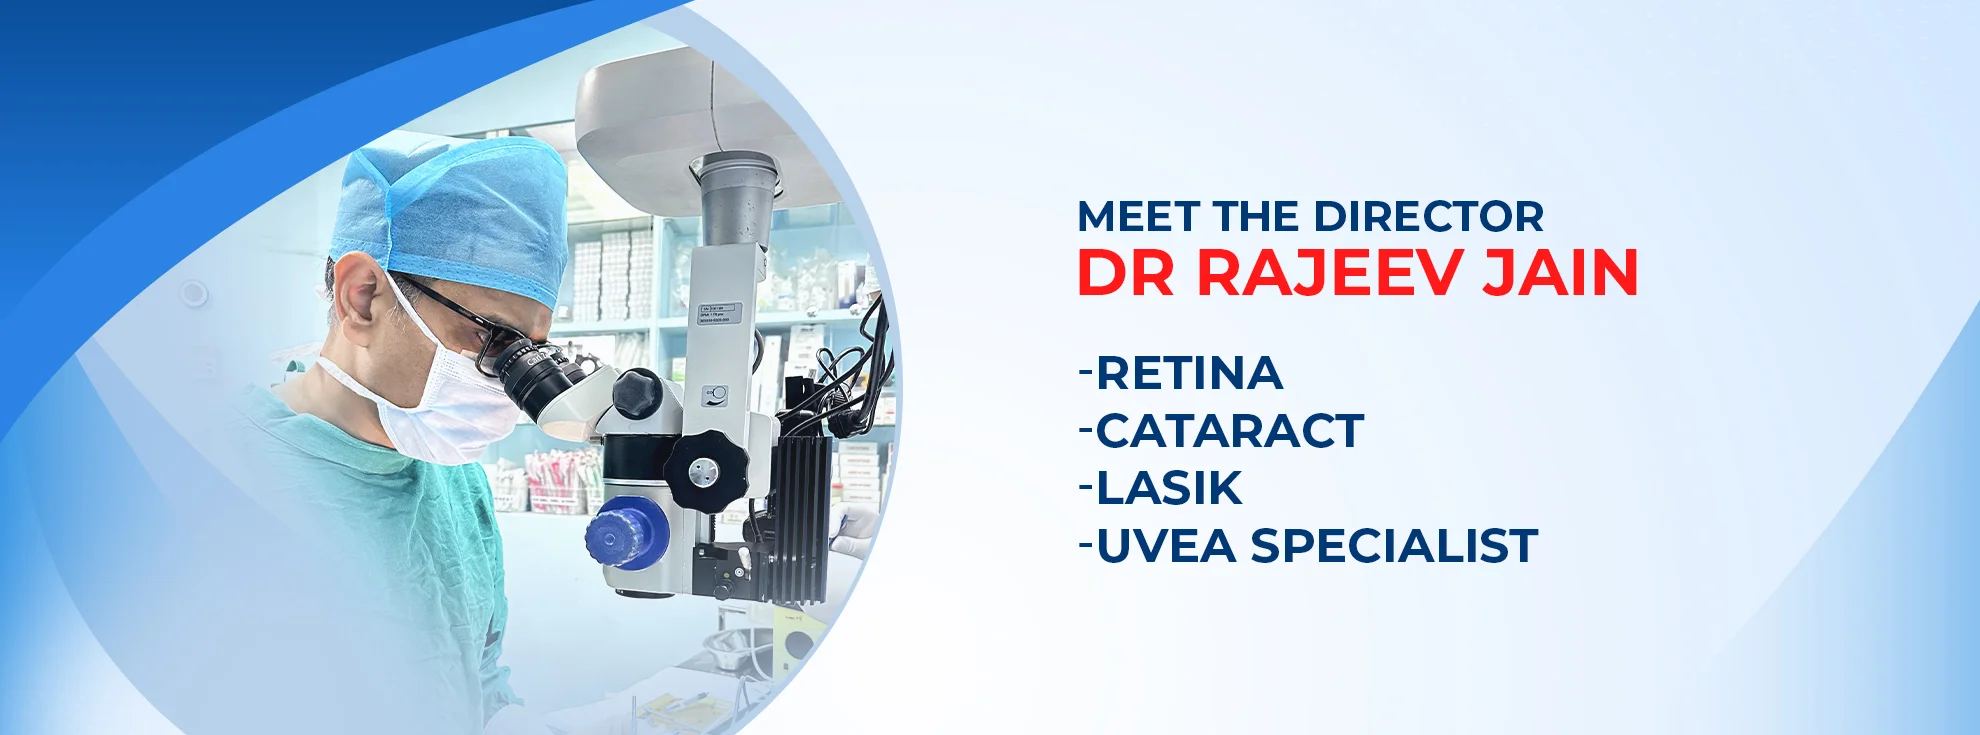 Dr. Rajeev Jain, The Director of Save Sight Centre